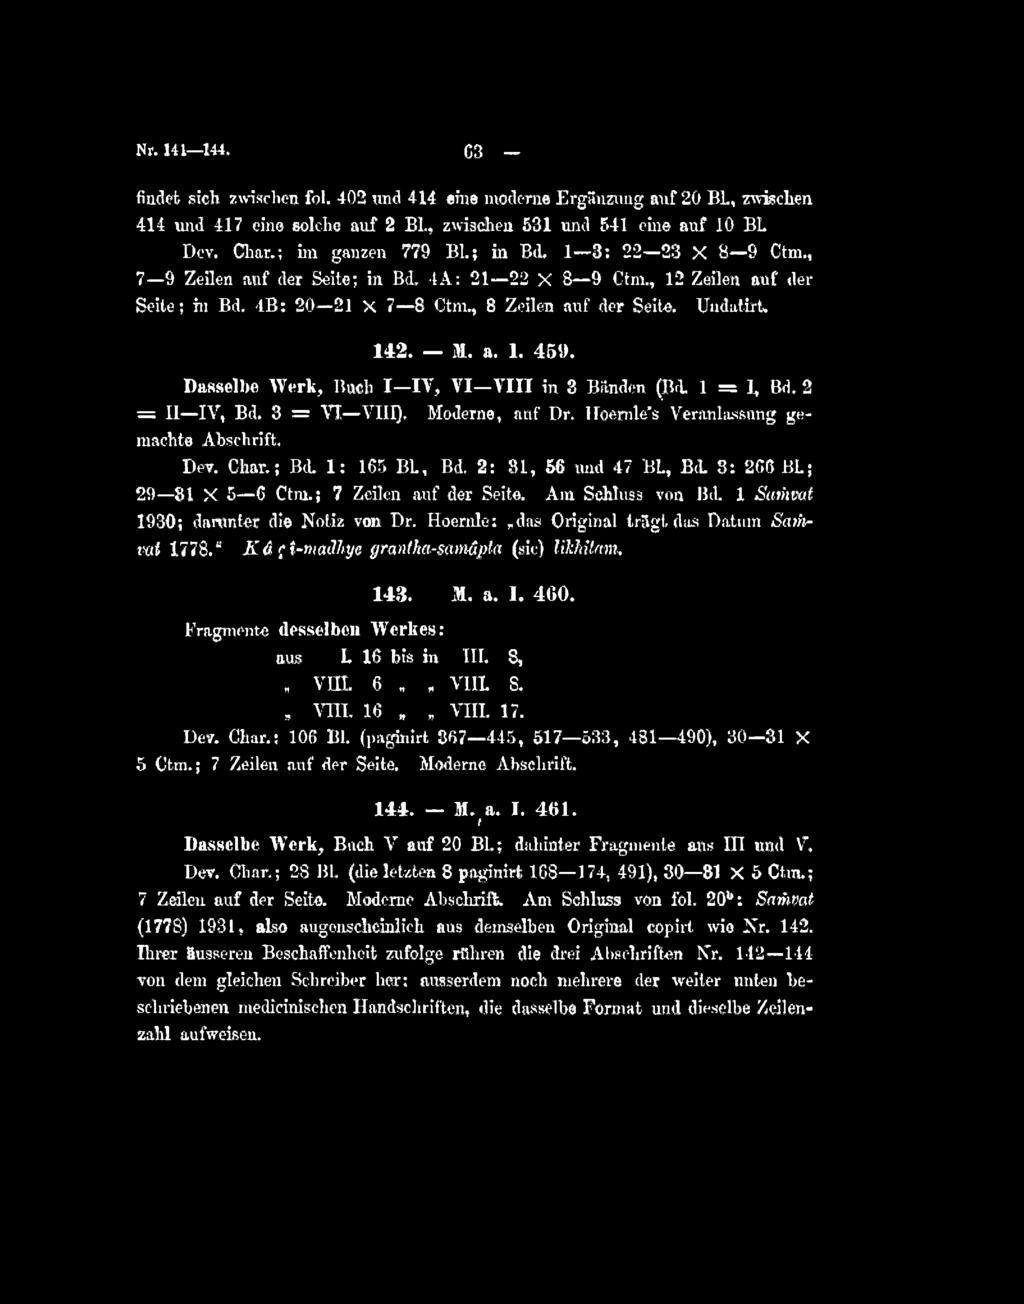 DMselbe yvwk, Buch I ly, TI TIH in 3 Banden (Bd. 1 I, Bd. 2 = n IV, Bd. 8 = VI Vm). Moderne, auf Dr. Hoemte's Veranlaseung gemachte Abschrift. Dev. Cliar. ; Bd. 1: 165 Bl, Bd. 2: 31.